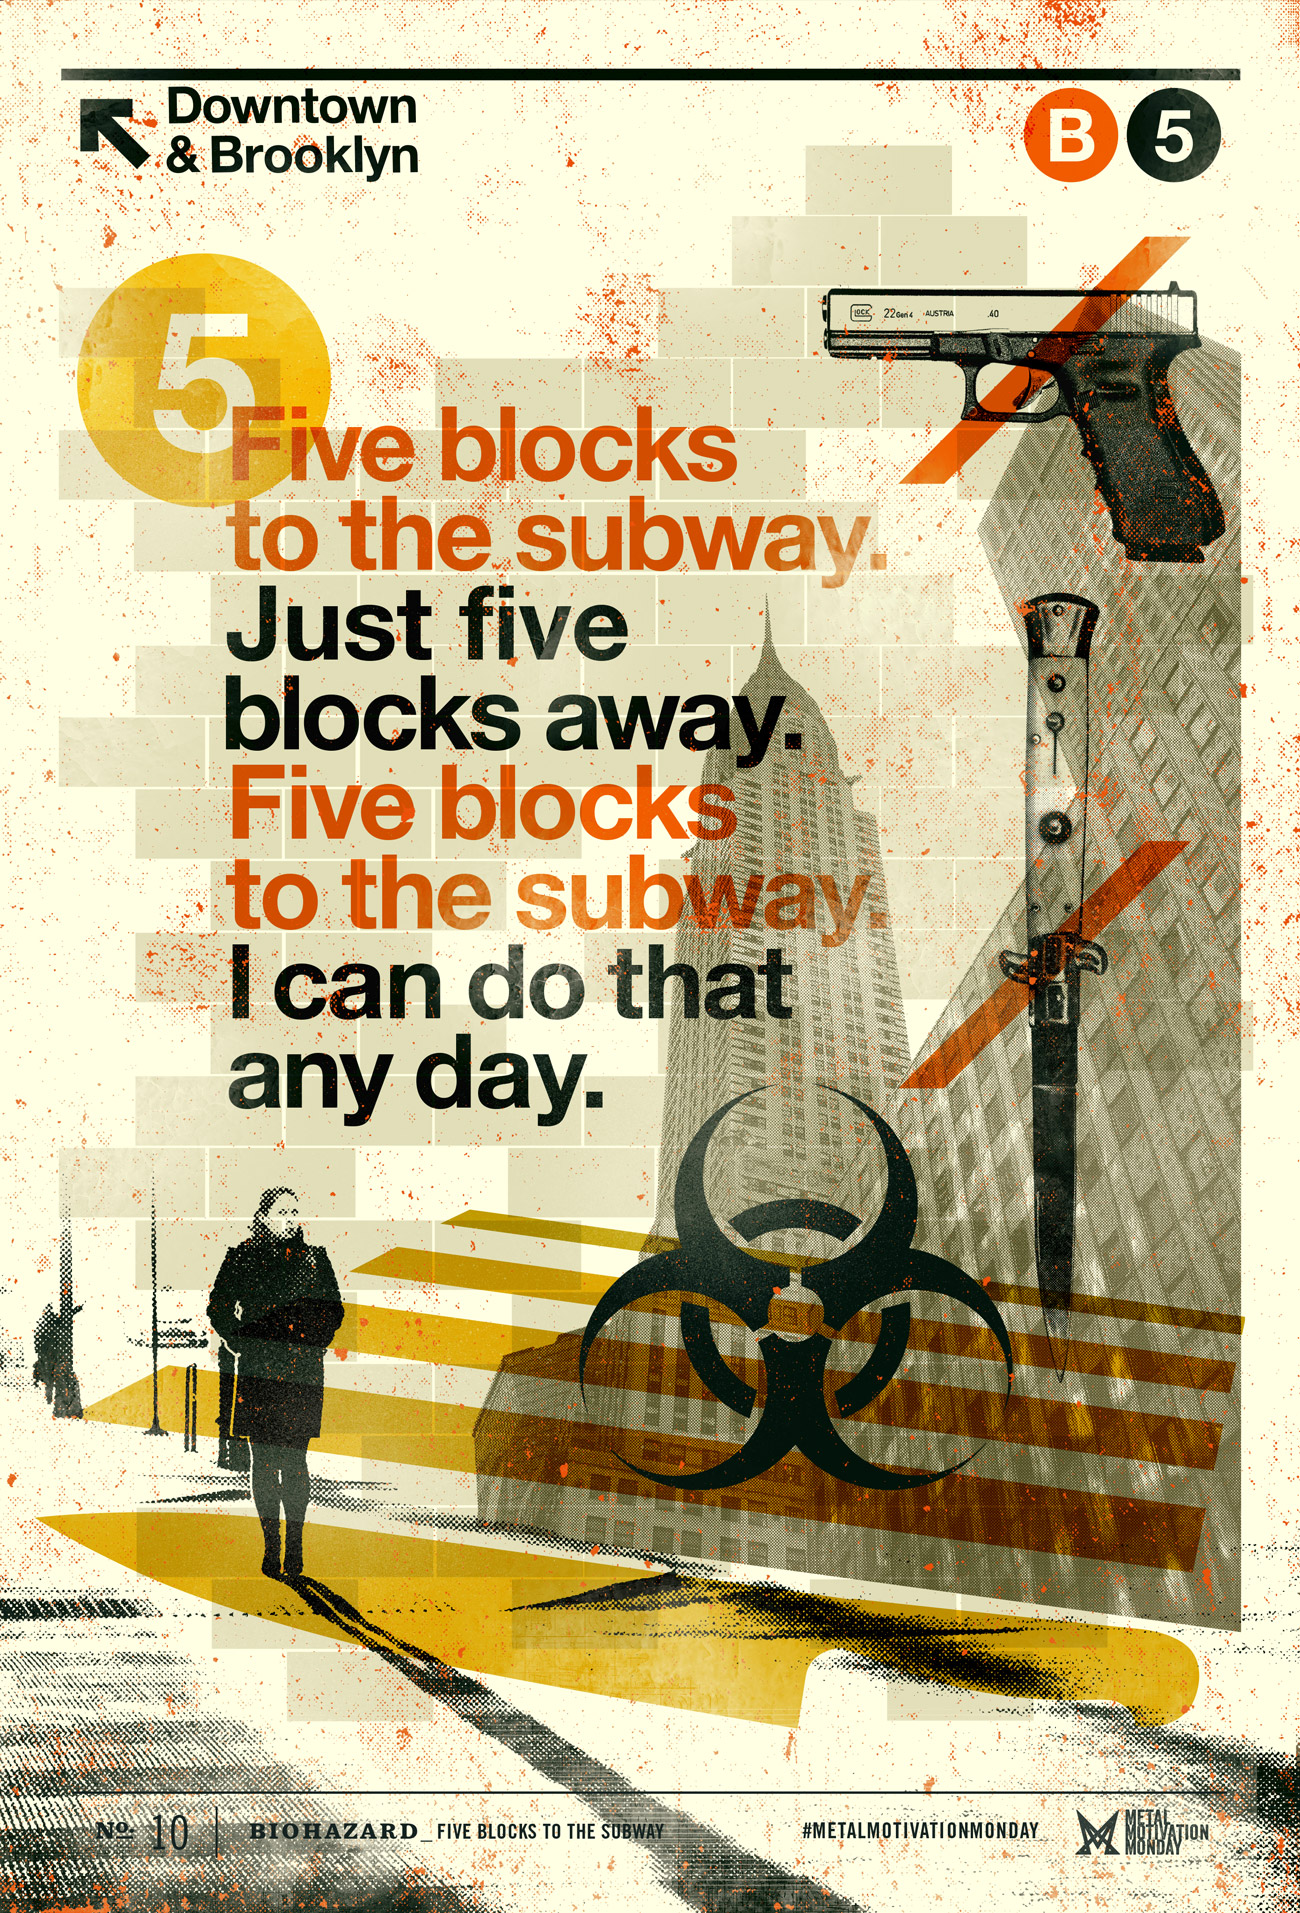 Biohazard: Five Blocks To The Subway